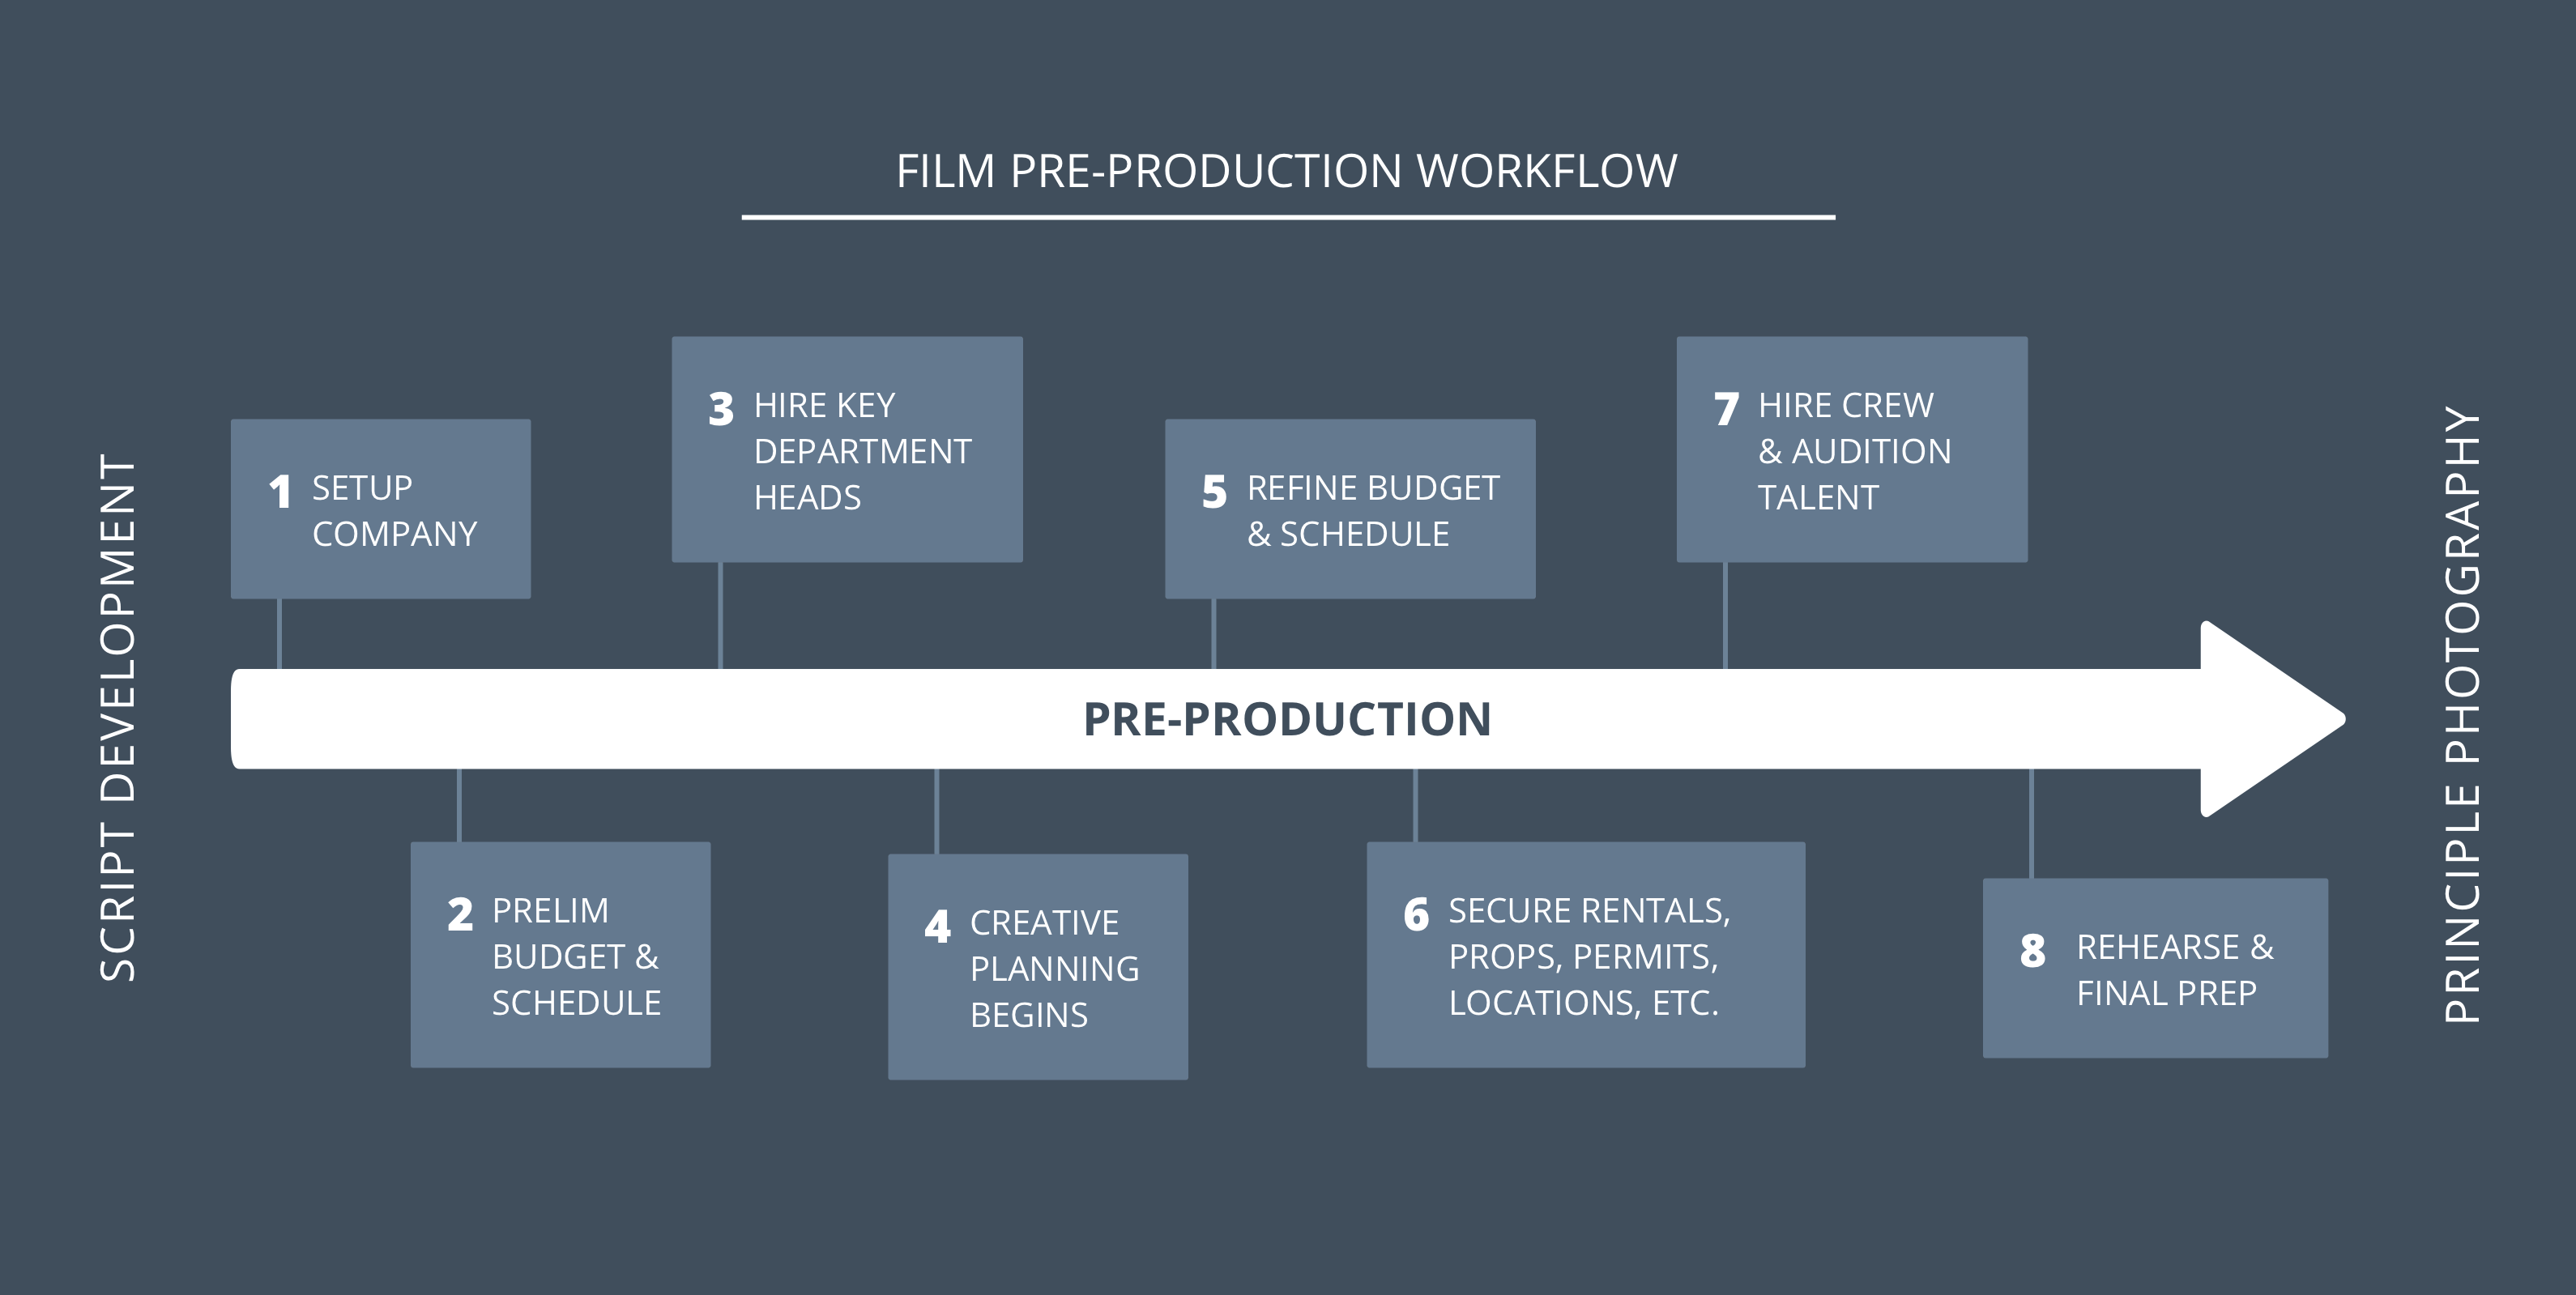 The Complete Film Pre Production Checklist Roadmap - StudioBinder - Pre-Production Checklist and Workflow - StudioBinder